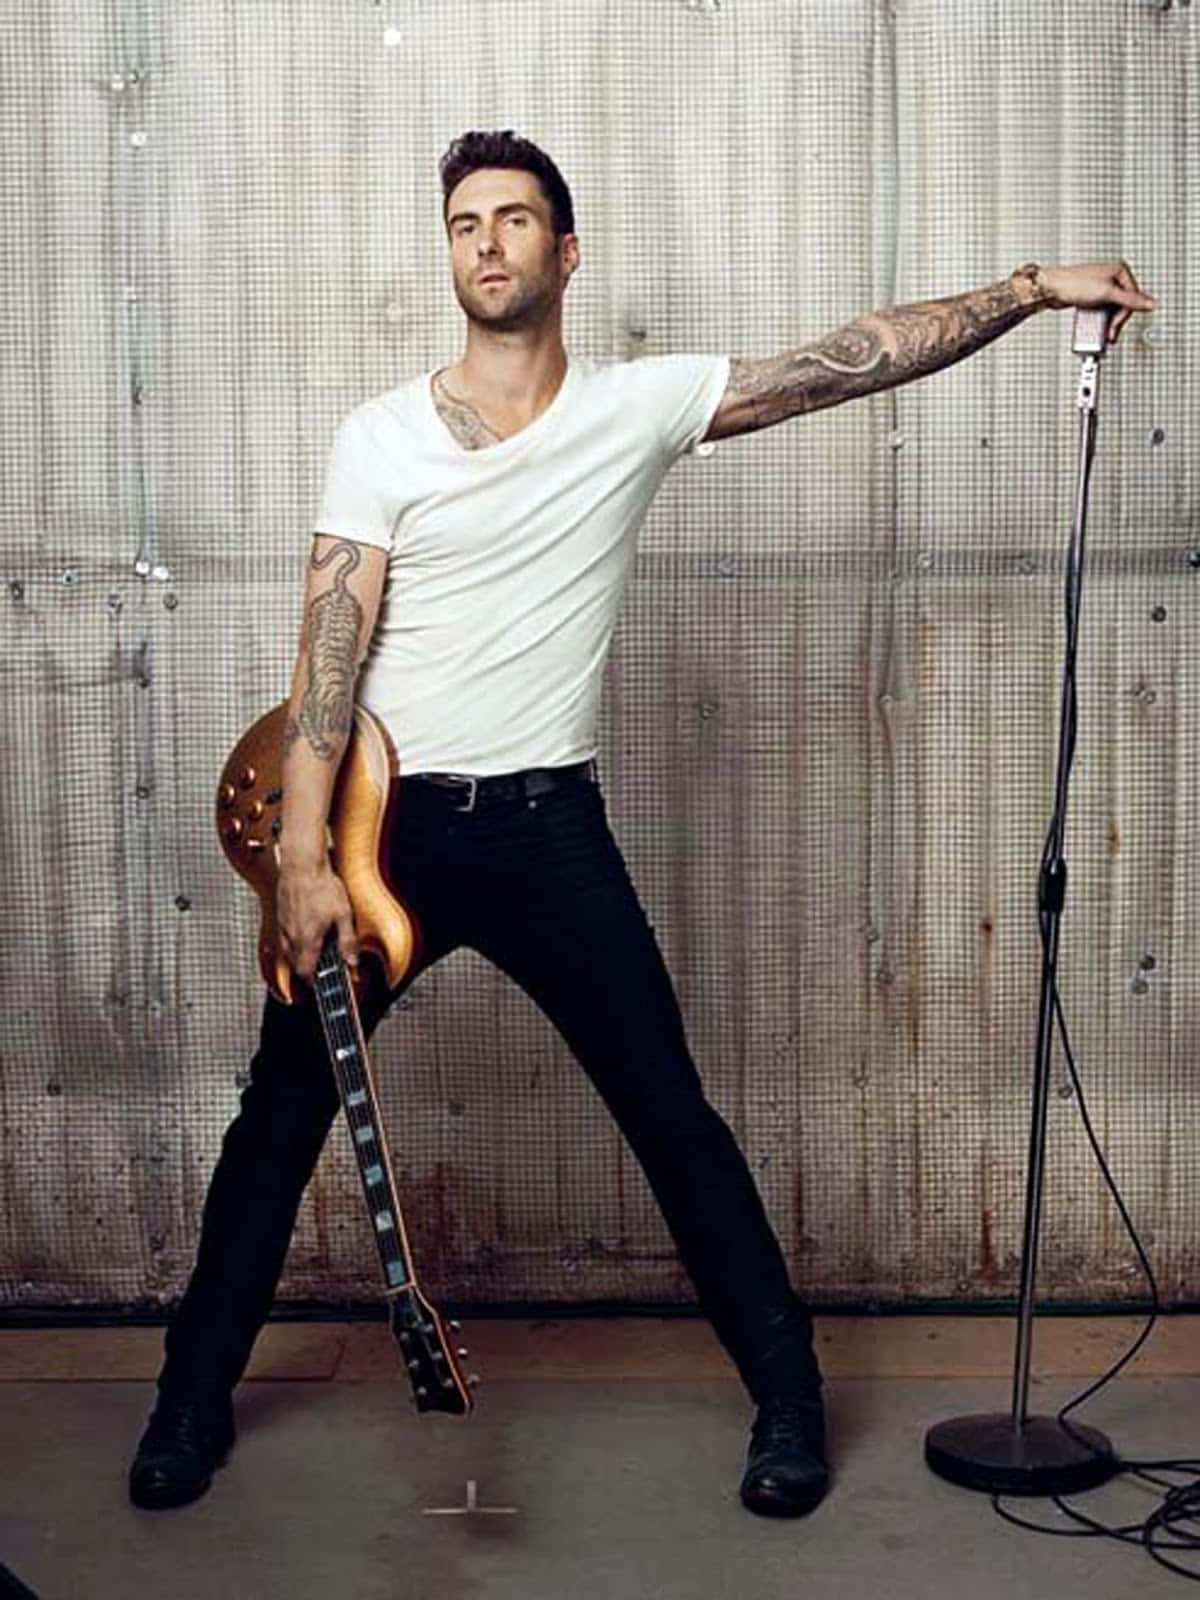 Adam Levine, lead singer of Maroon 5